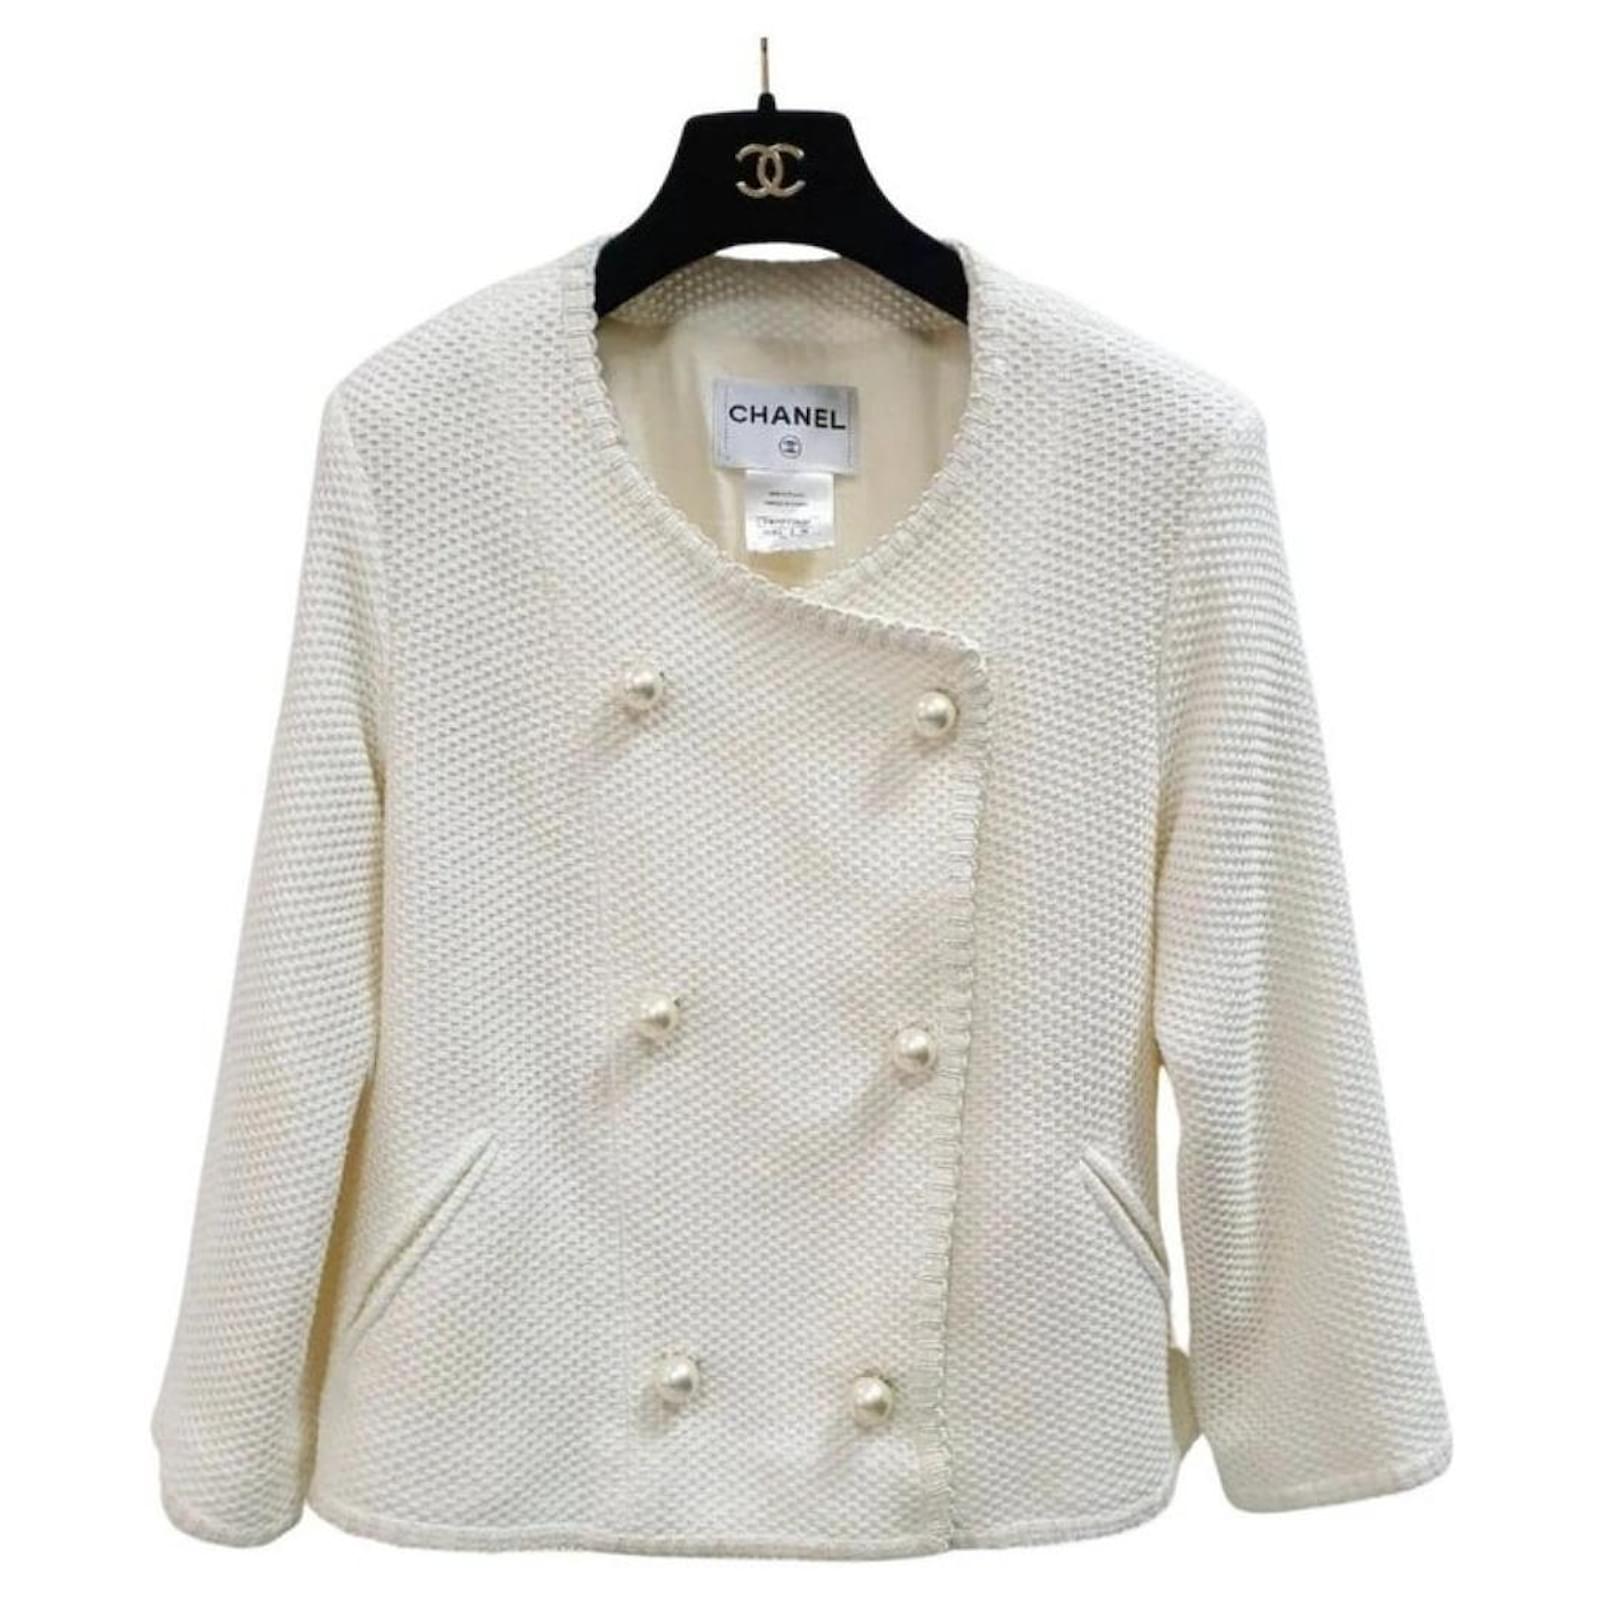 13K$ Jewel Buttons Lesage Tweed Jacket